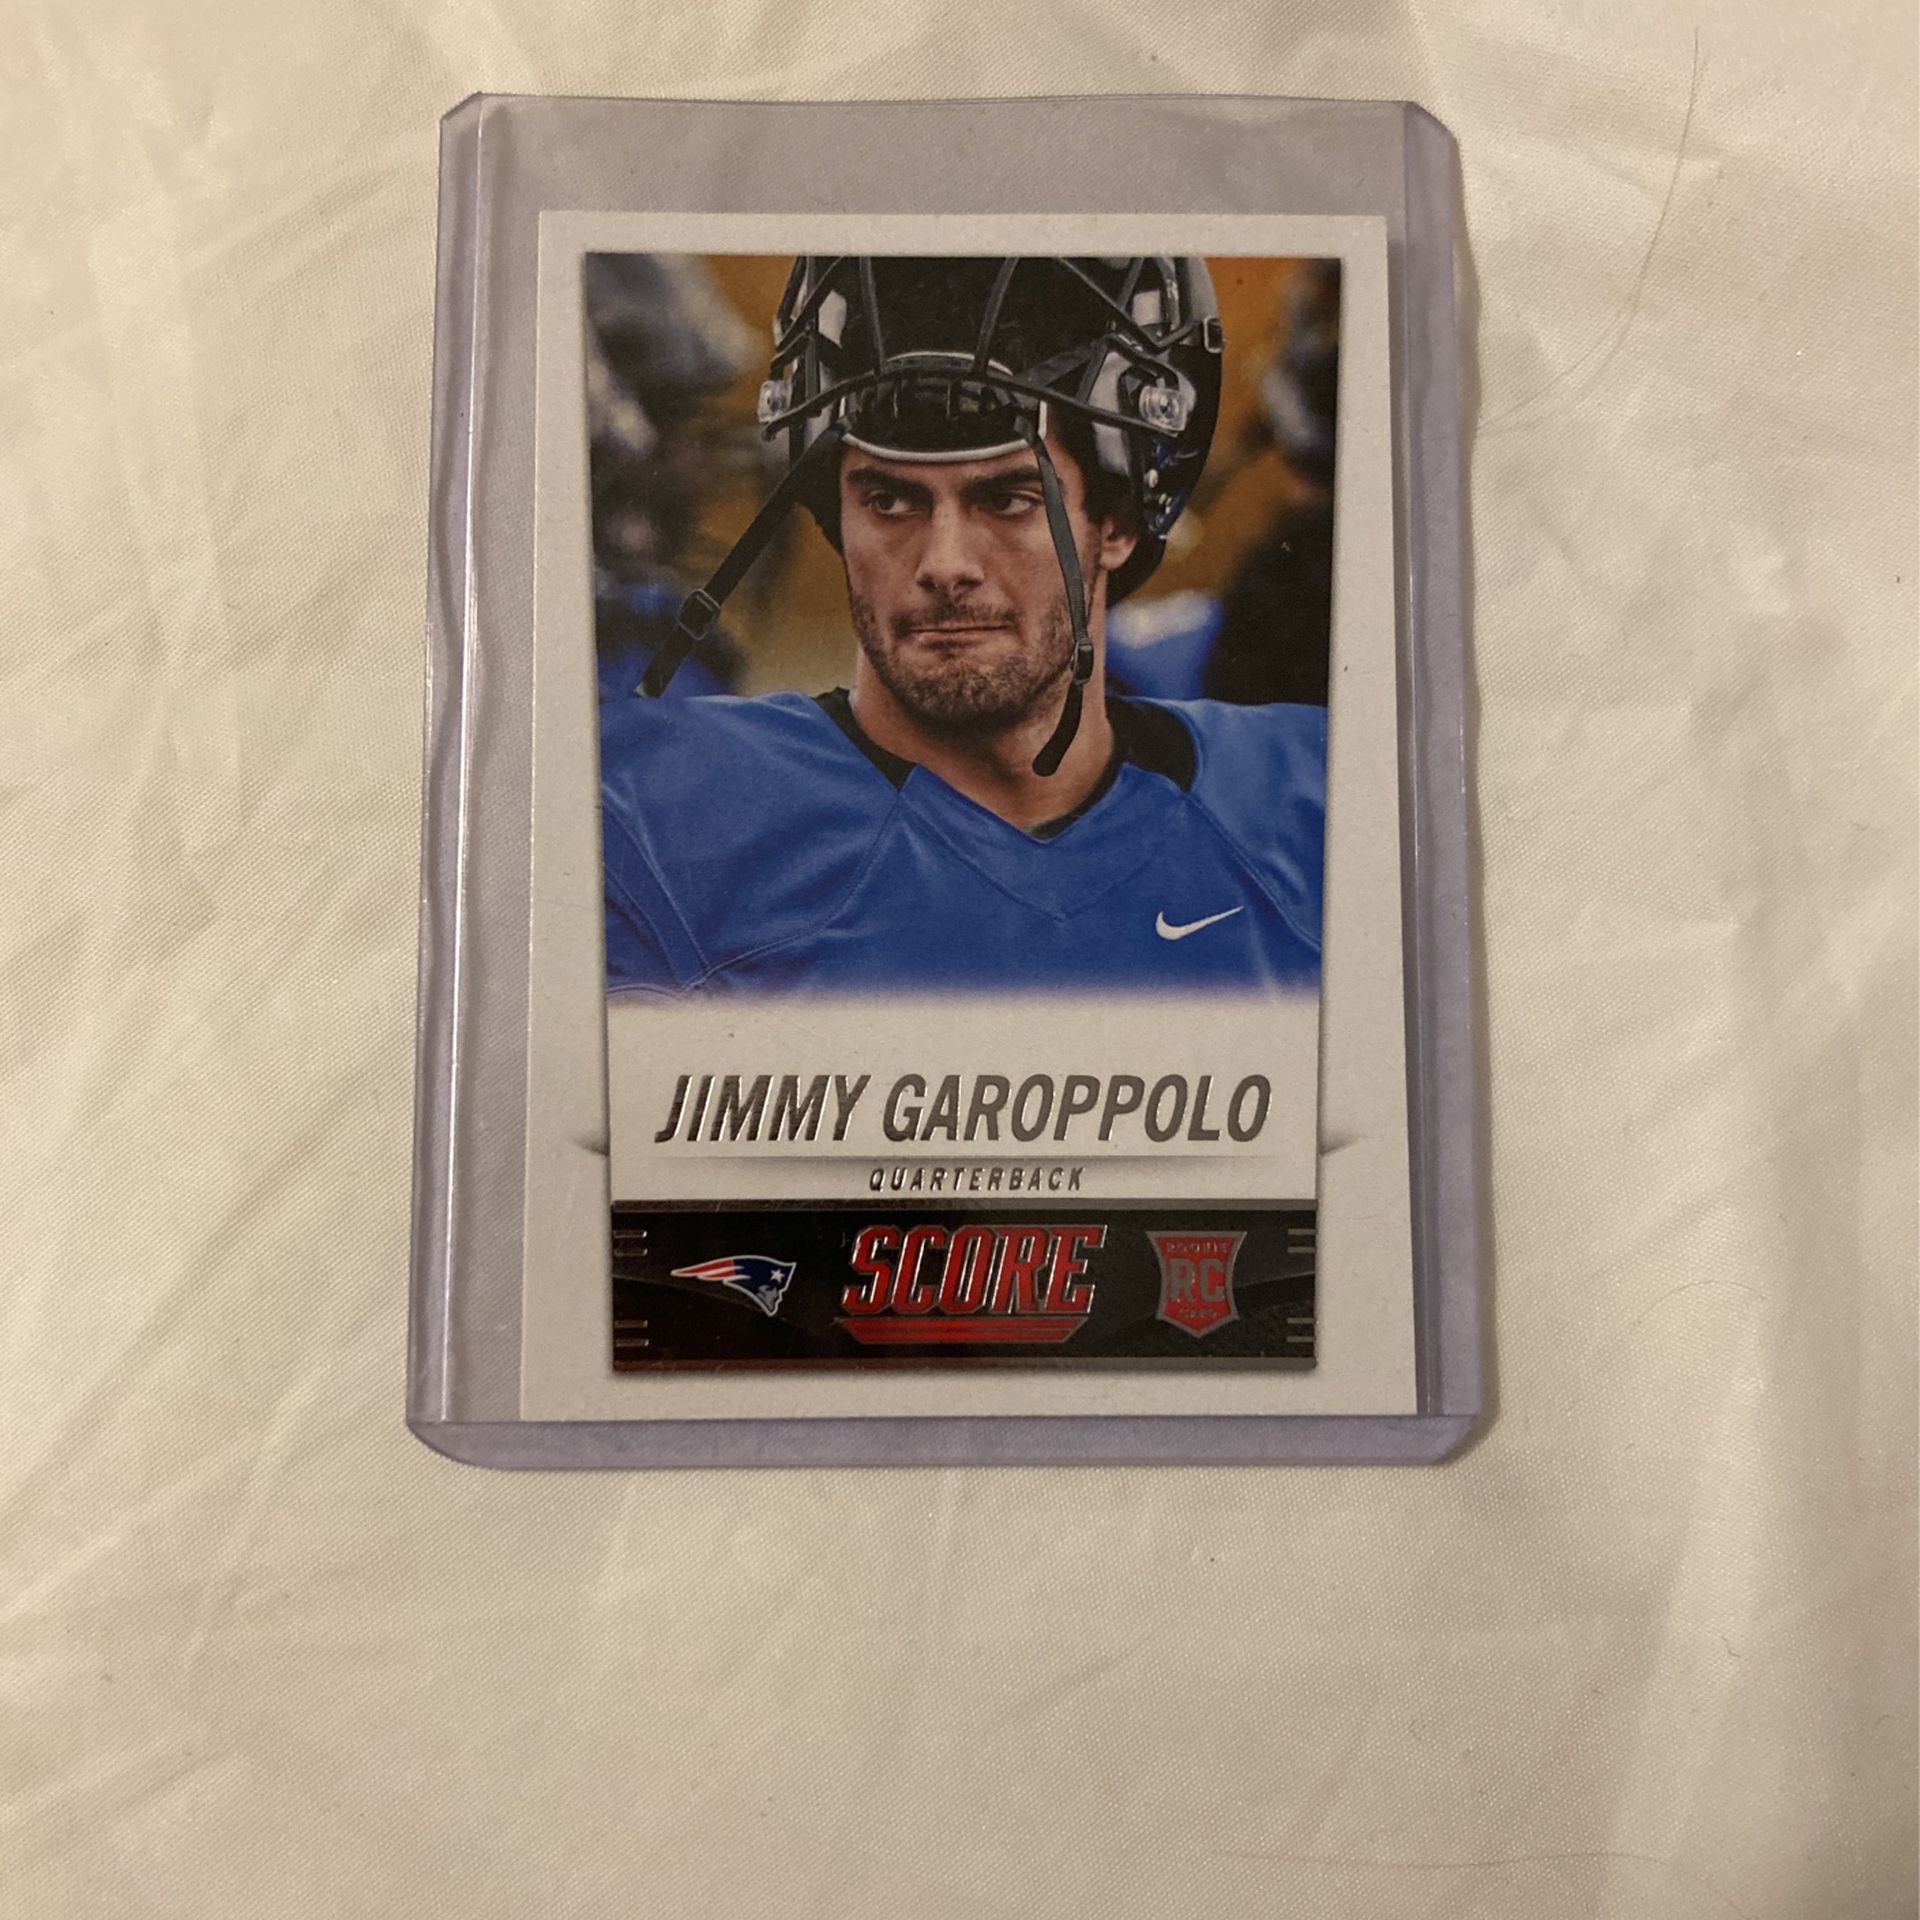 Jimmy Garoppolo football card rookie